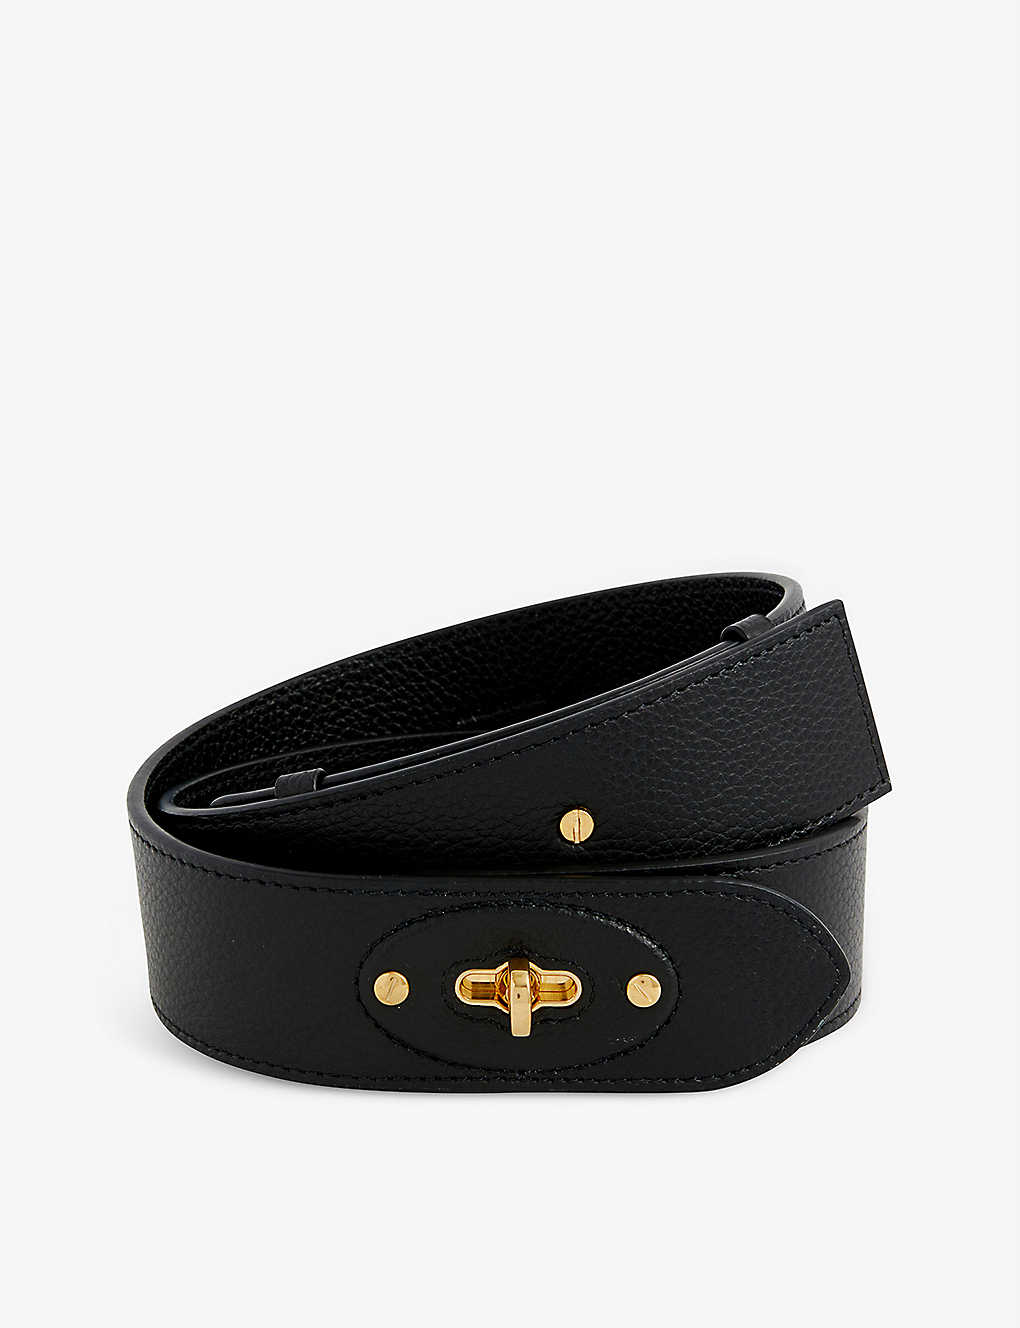 Mulberry Darley Pebble-grain Leather Belt In Black